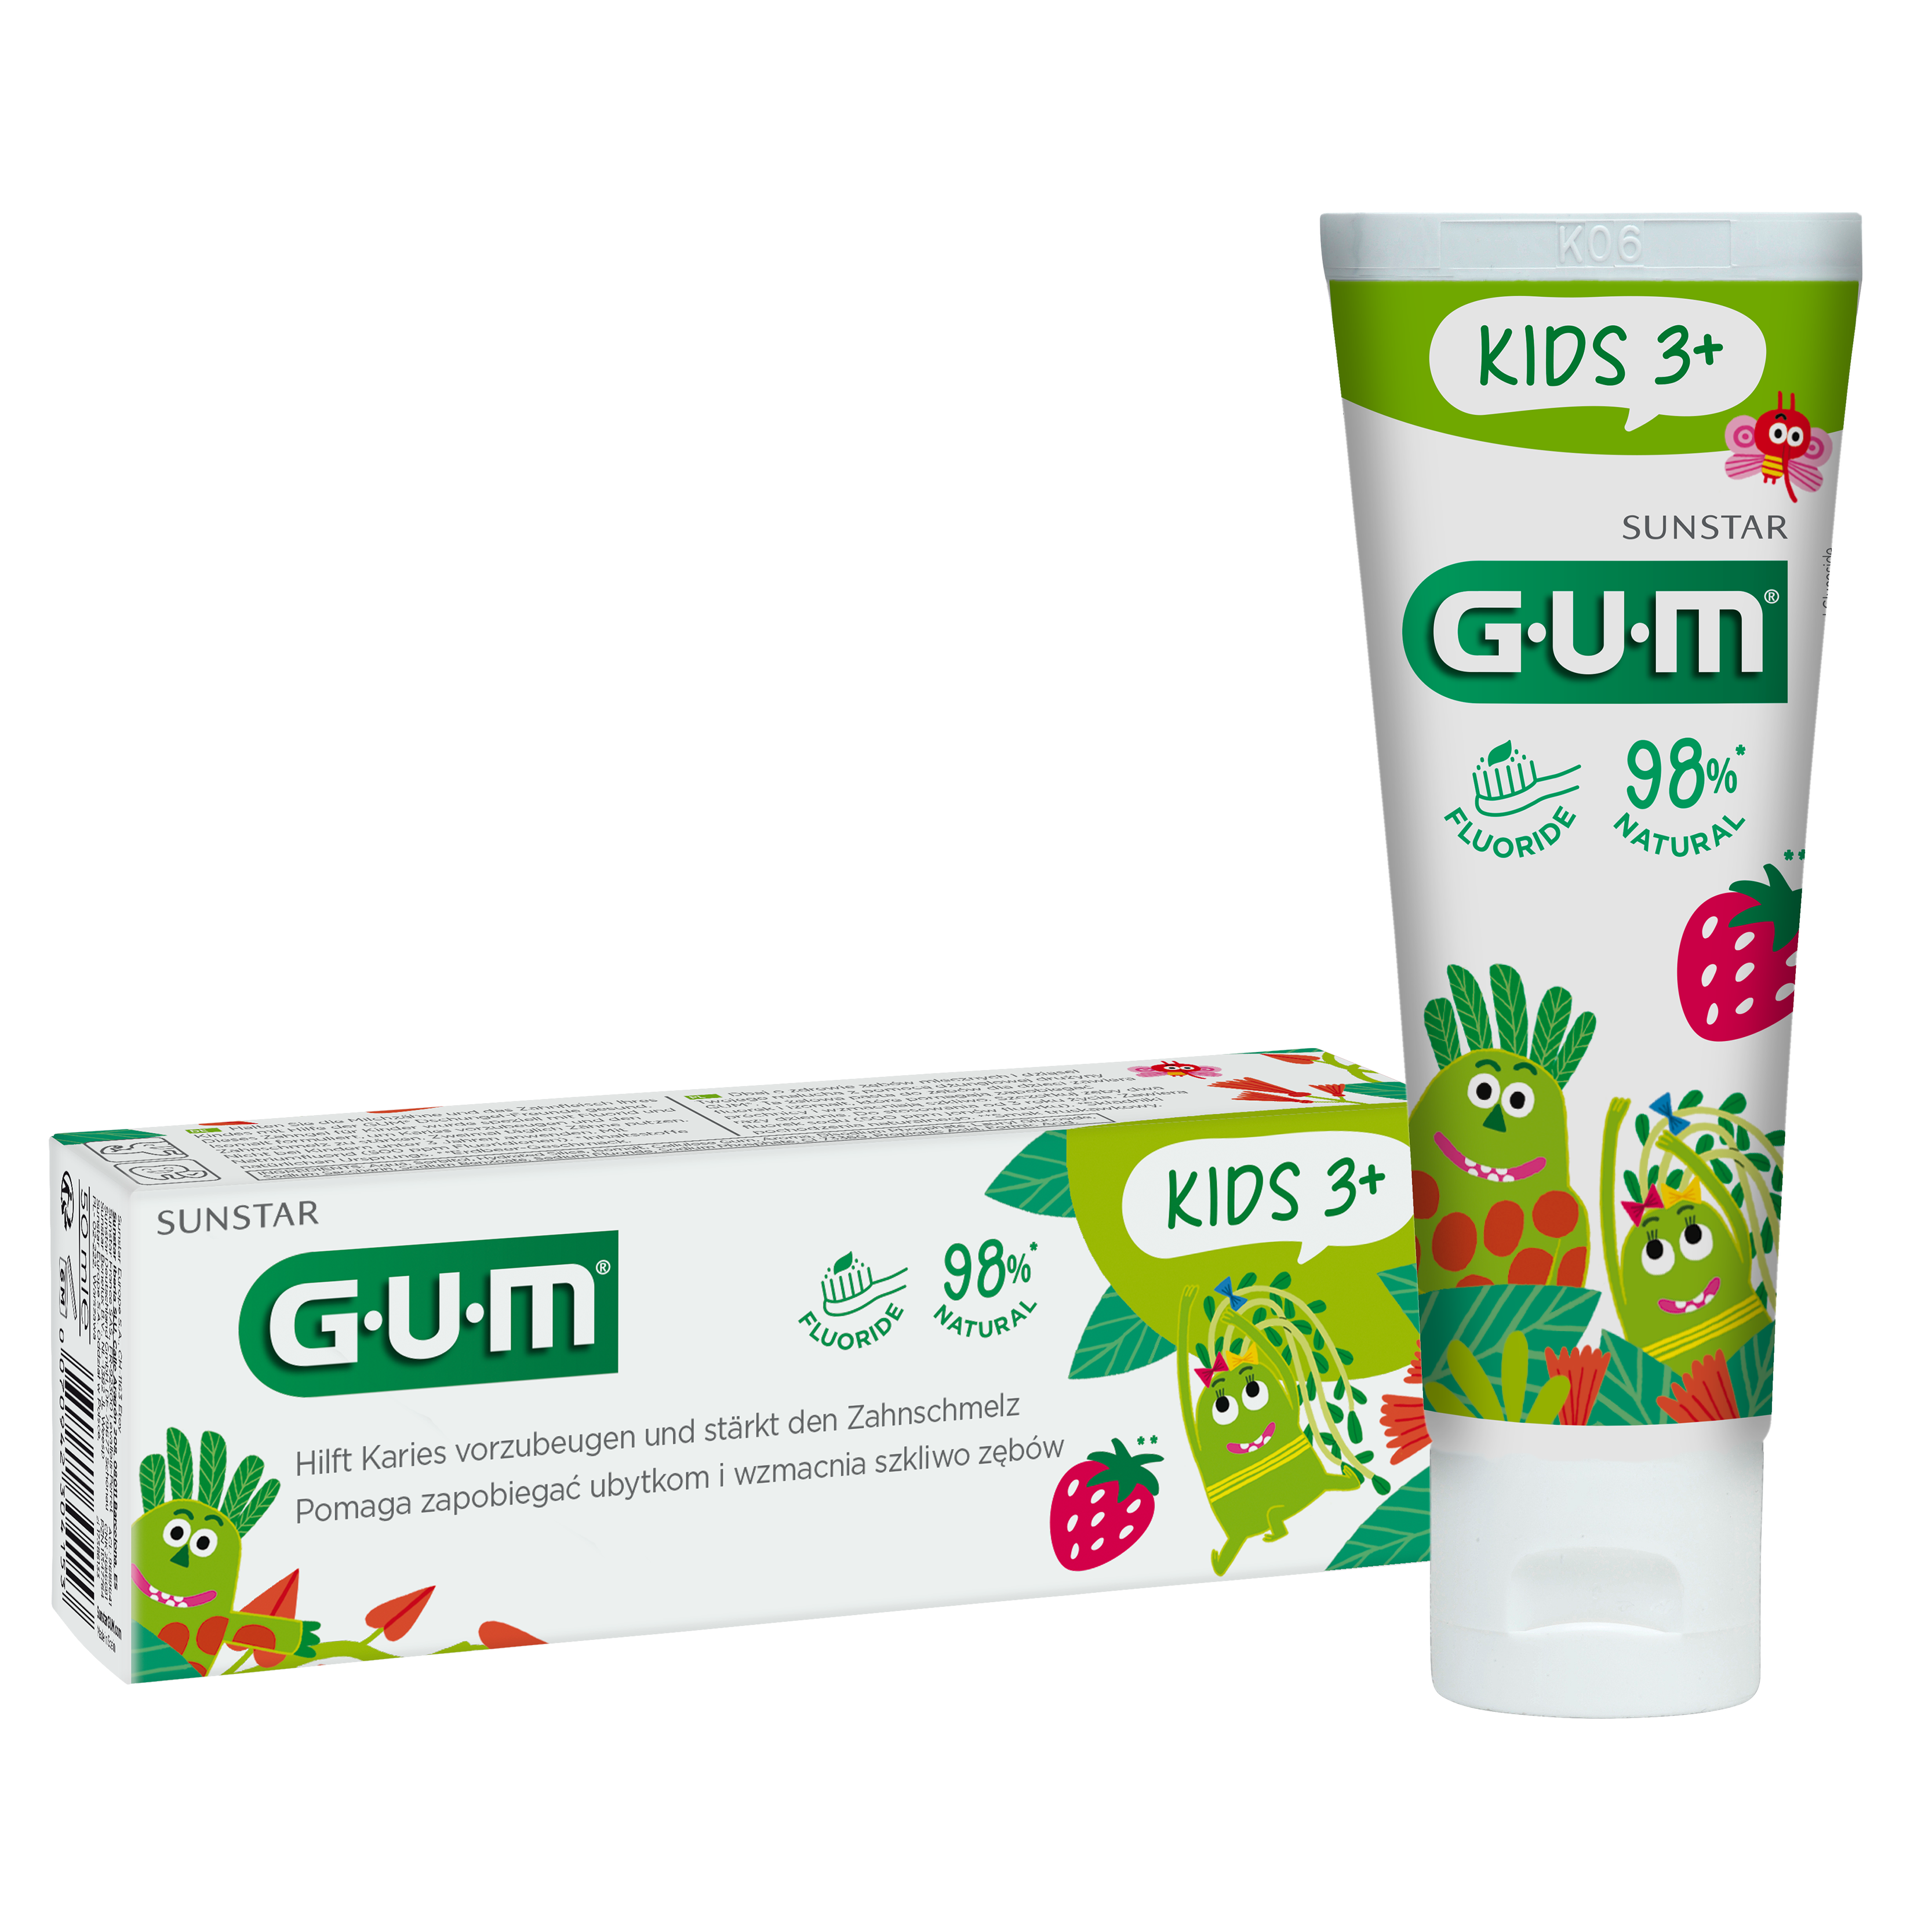 3000-DE-PL-GUM-KIDS-Toothpaste-50ml-Tube-Box-Mockup